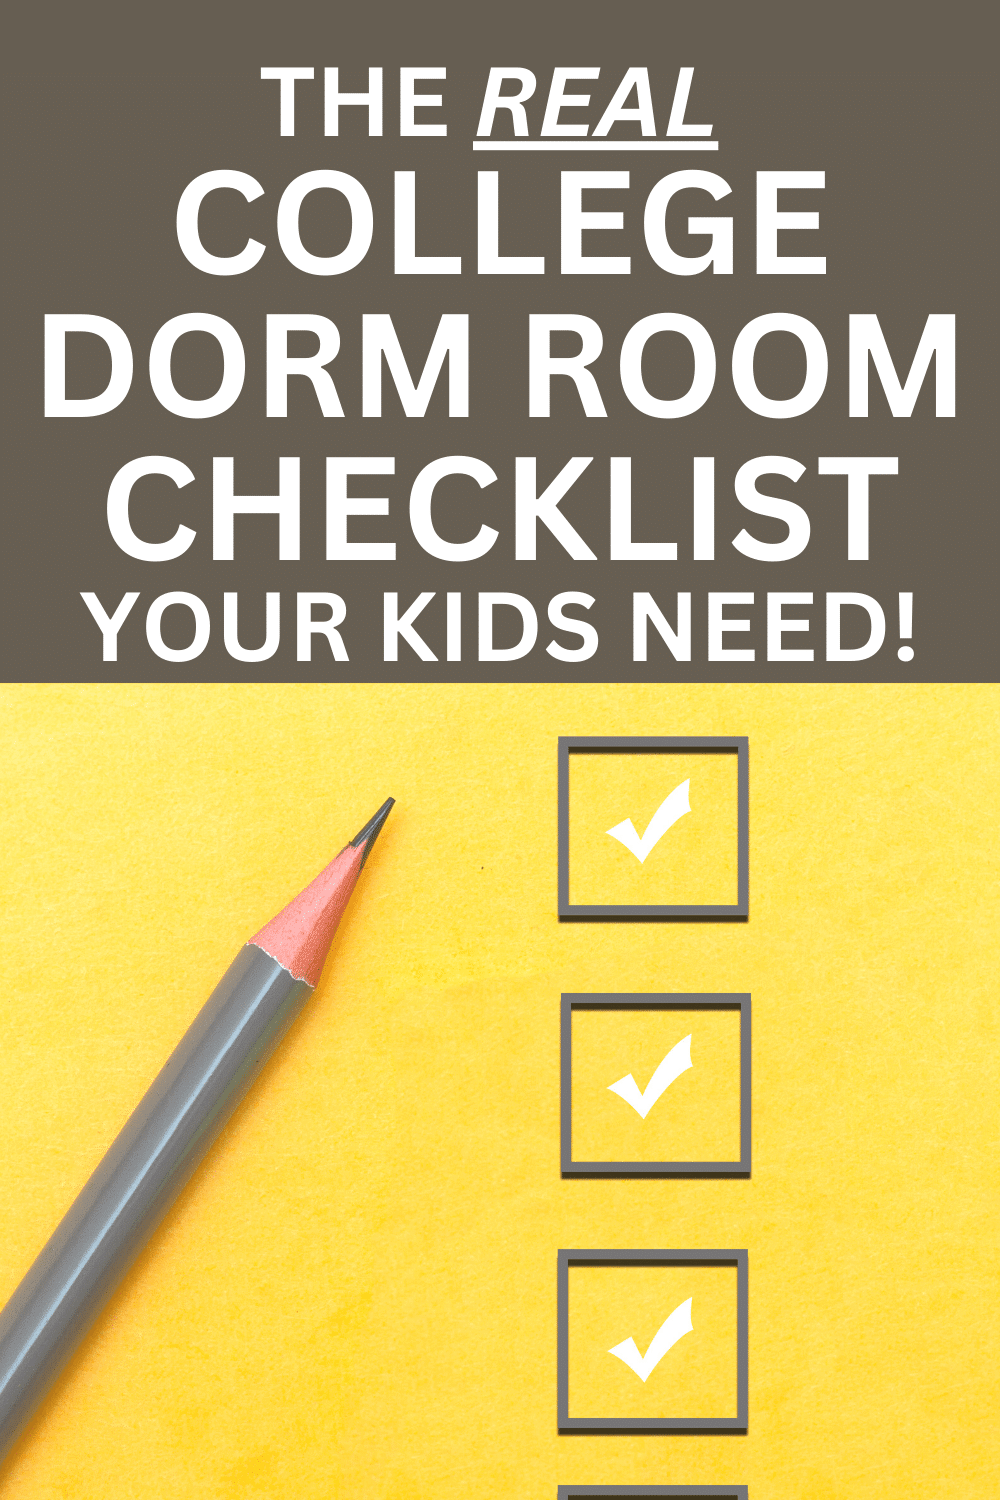 College Dorm Necessities Freshman Dorm Room Checklist (what to bring to dorm) TEXT OVER PENCIL NEXT TO A COLLEGE CHECKLIST